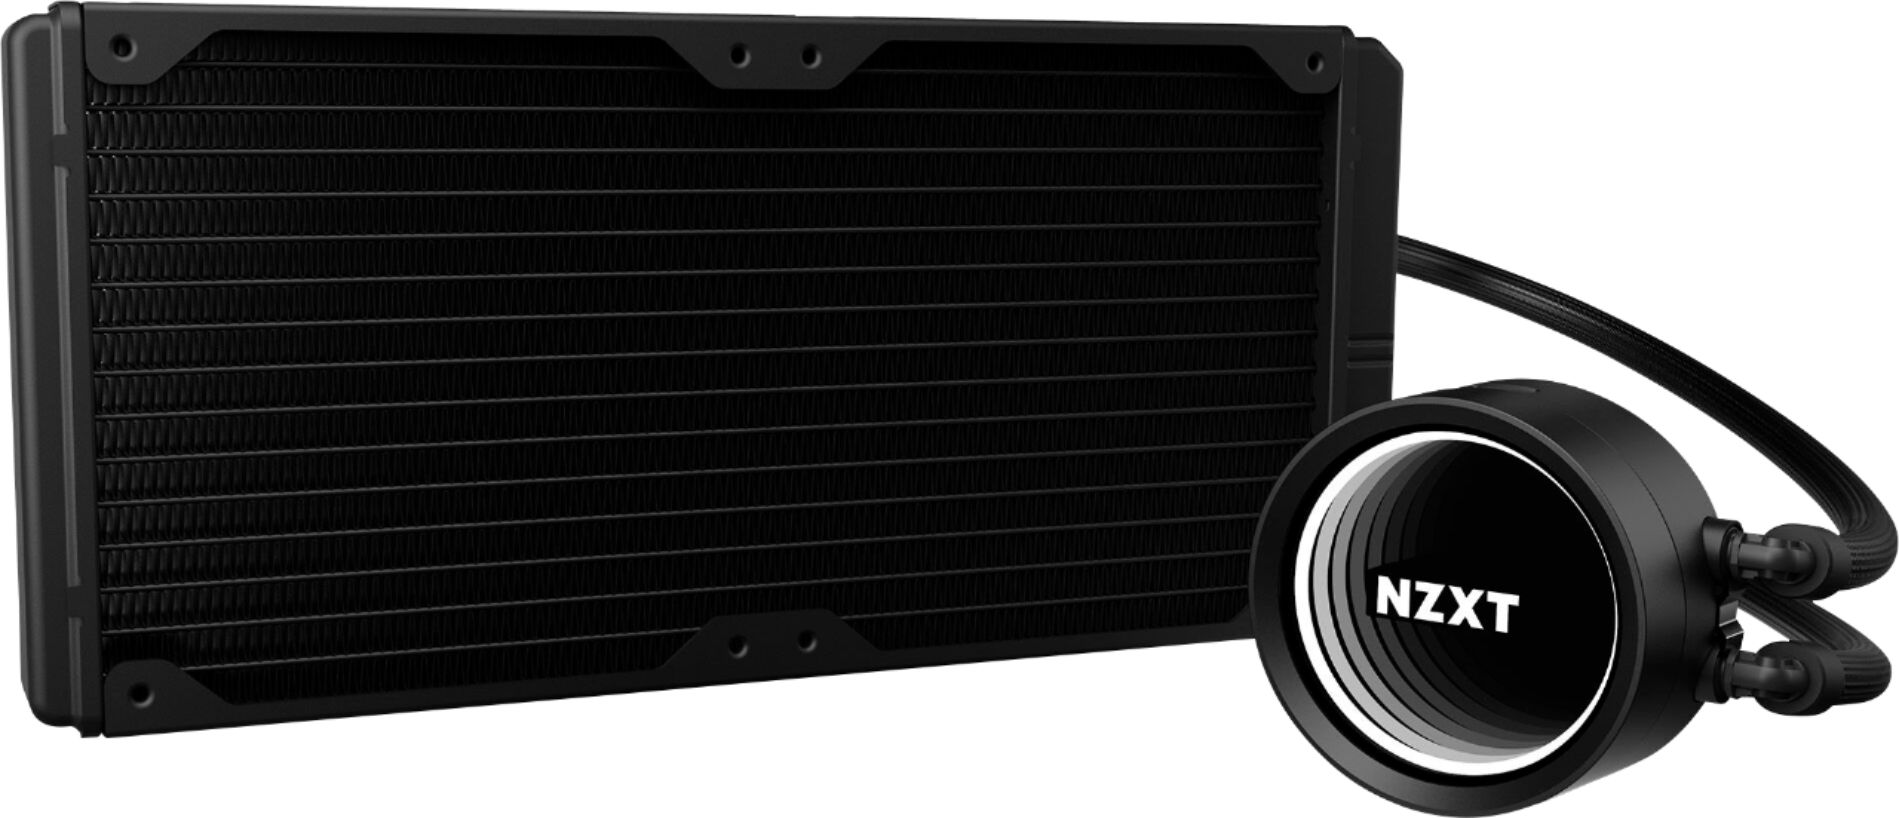 Nzxt Kraken X63 Rgb All In One 280mm Radiator Cpu Liquid Cooling System Black Kraken X63 Best Buy